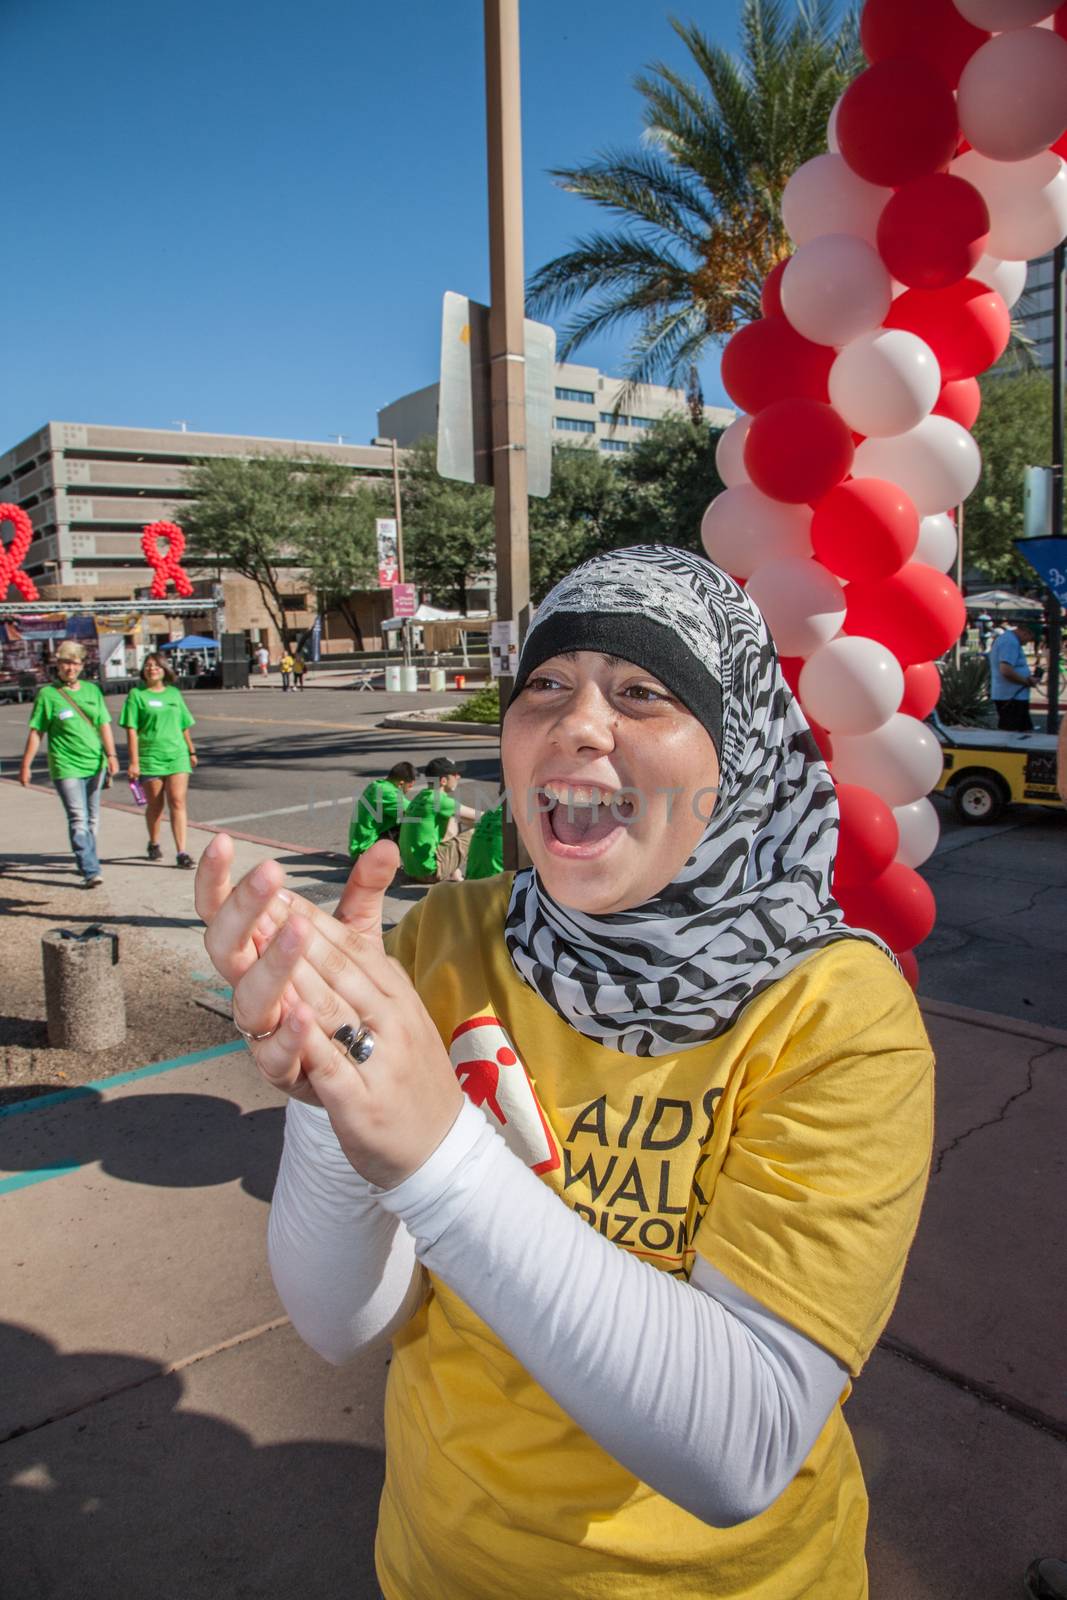 TUCSON, AZ/USA - OCTOBER 12:  Woman in head scarf ecnouraging walkers on October 12, 2014 in Tucson, Arizona, USA.